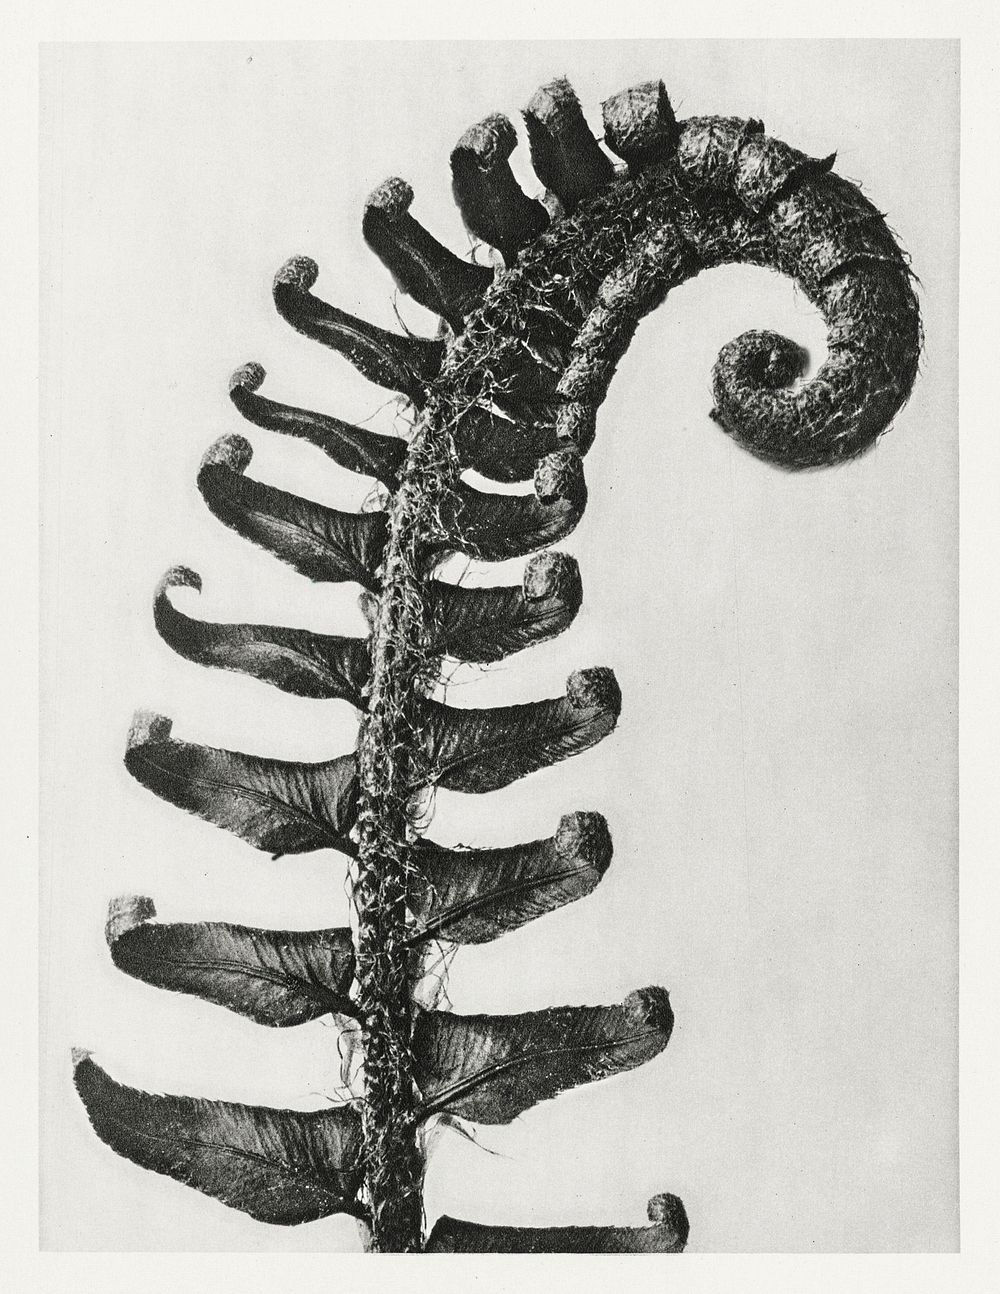 Polystichum Munitum (Prickly Shield&ndash;Fern) Leaf enlarged 6 times from Urformen der Kunst (1928) by Karl Blossfeldt.…